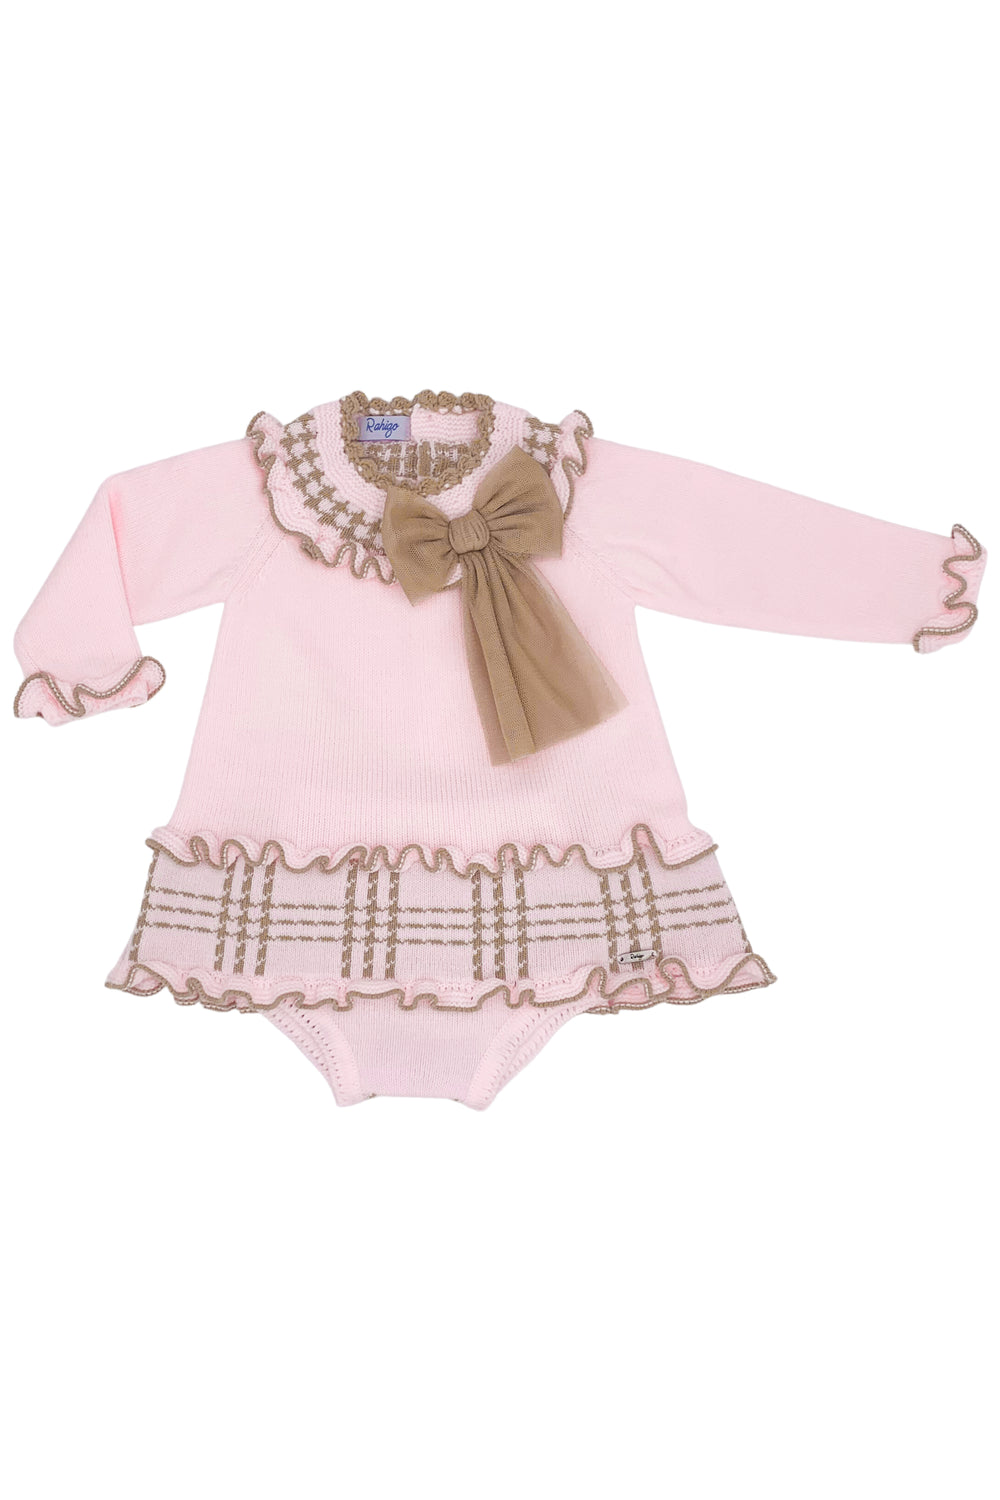 Rahigo "Miriam" Pink & Camel Knit Dress | Millie and John